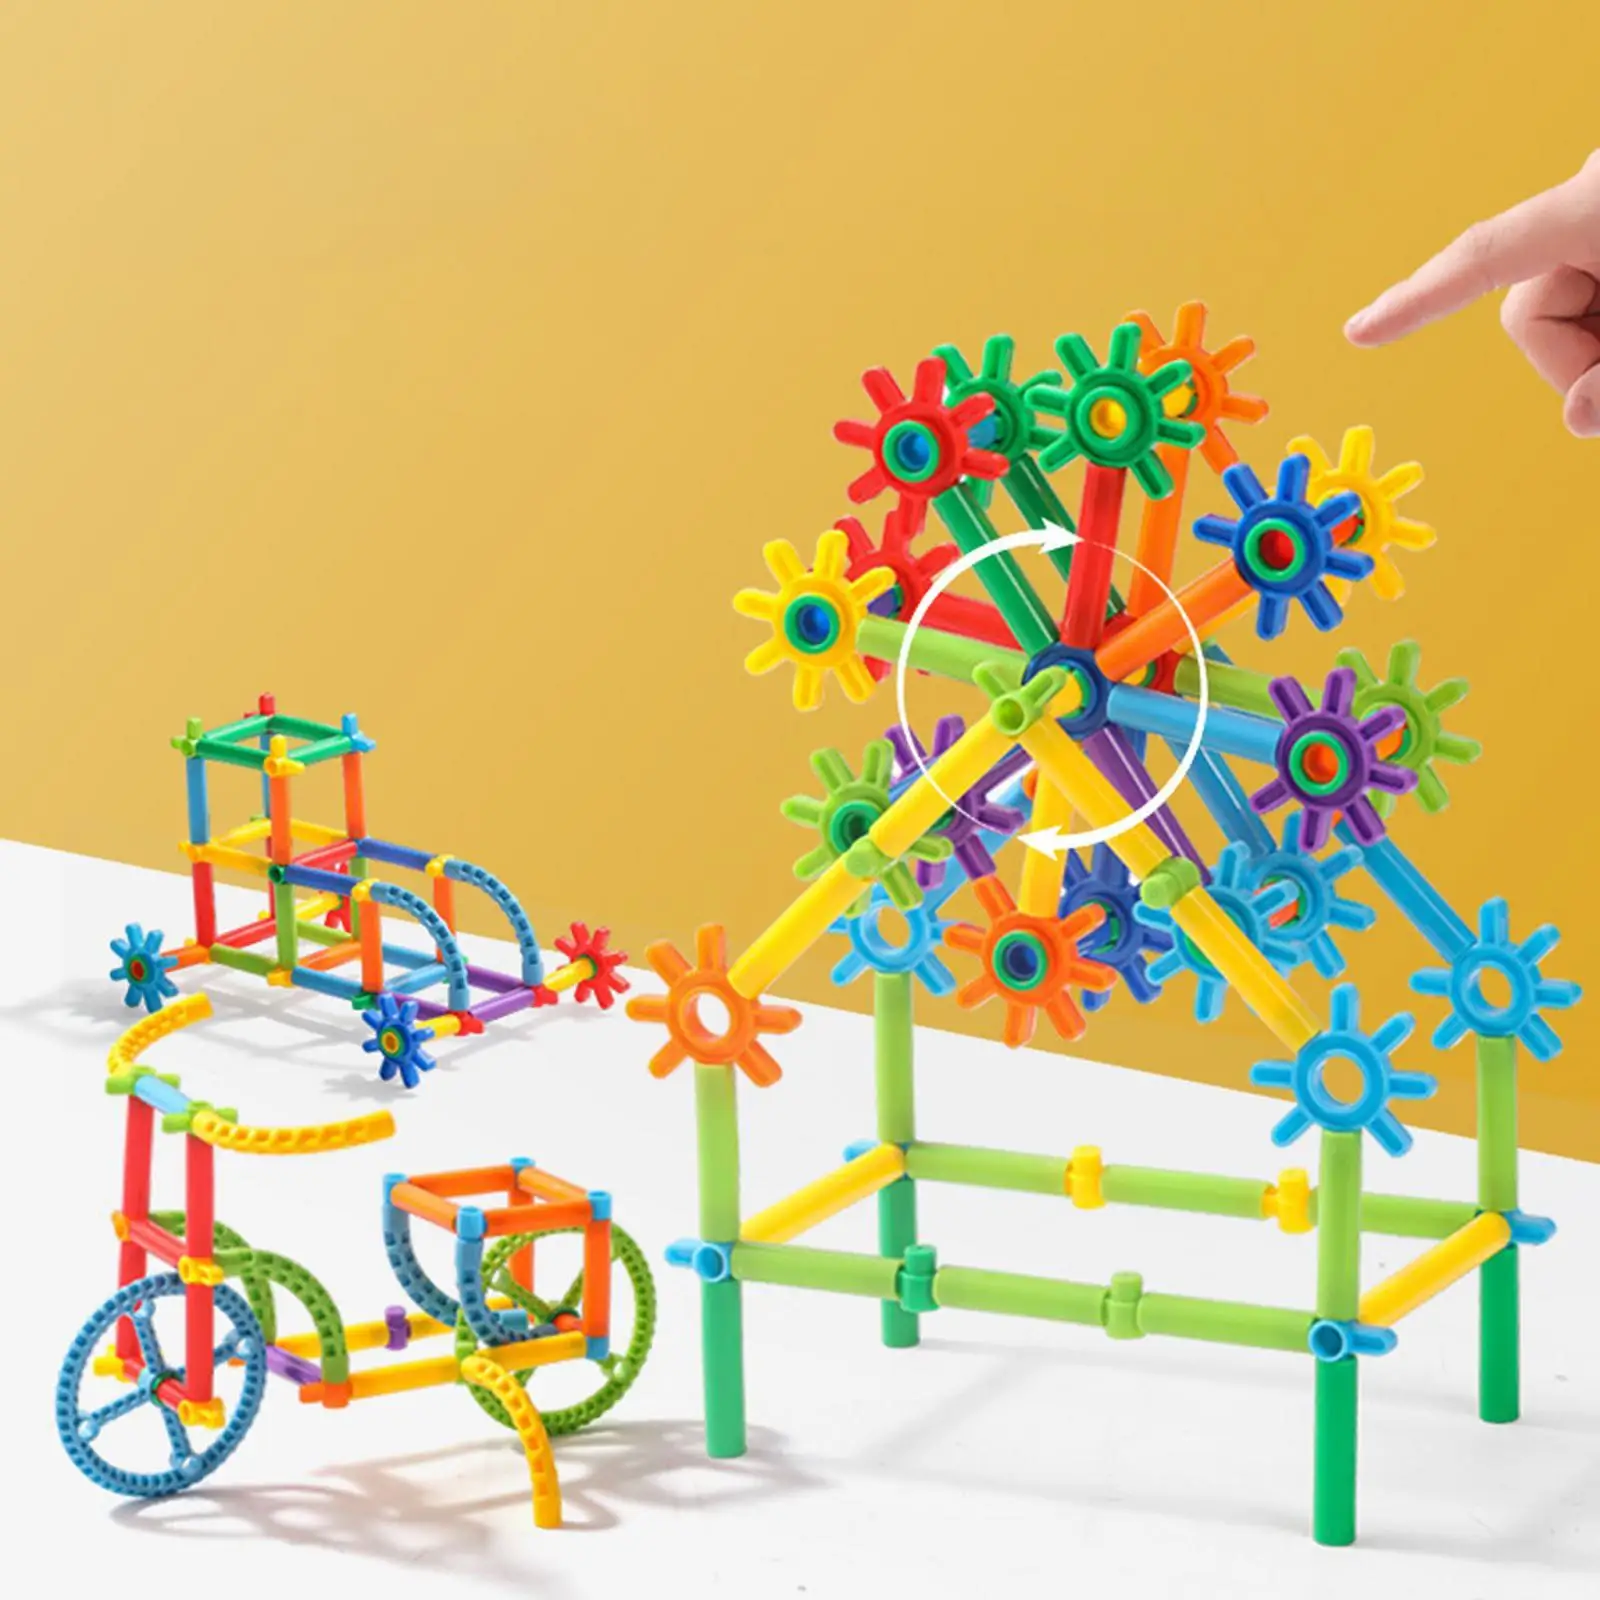 Straw Stem Building Toys Motor Skills Engineering Toy Colorful Educational Interlocking Sticks for Boys Girls Birthday Gift